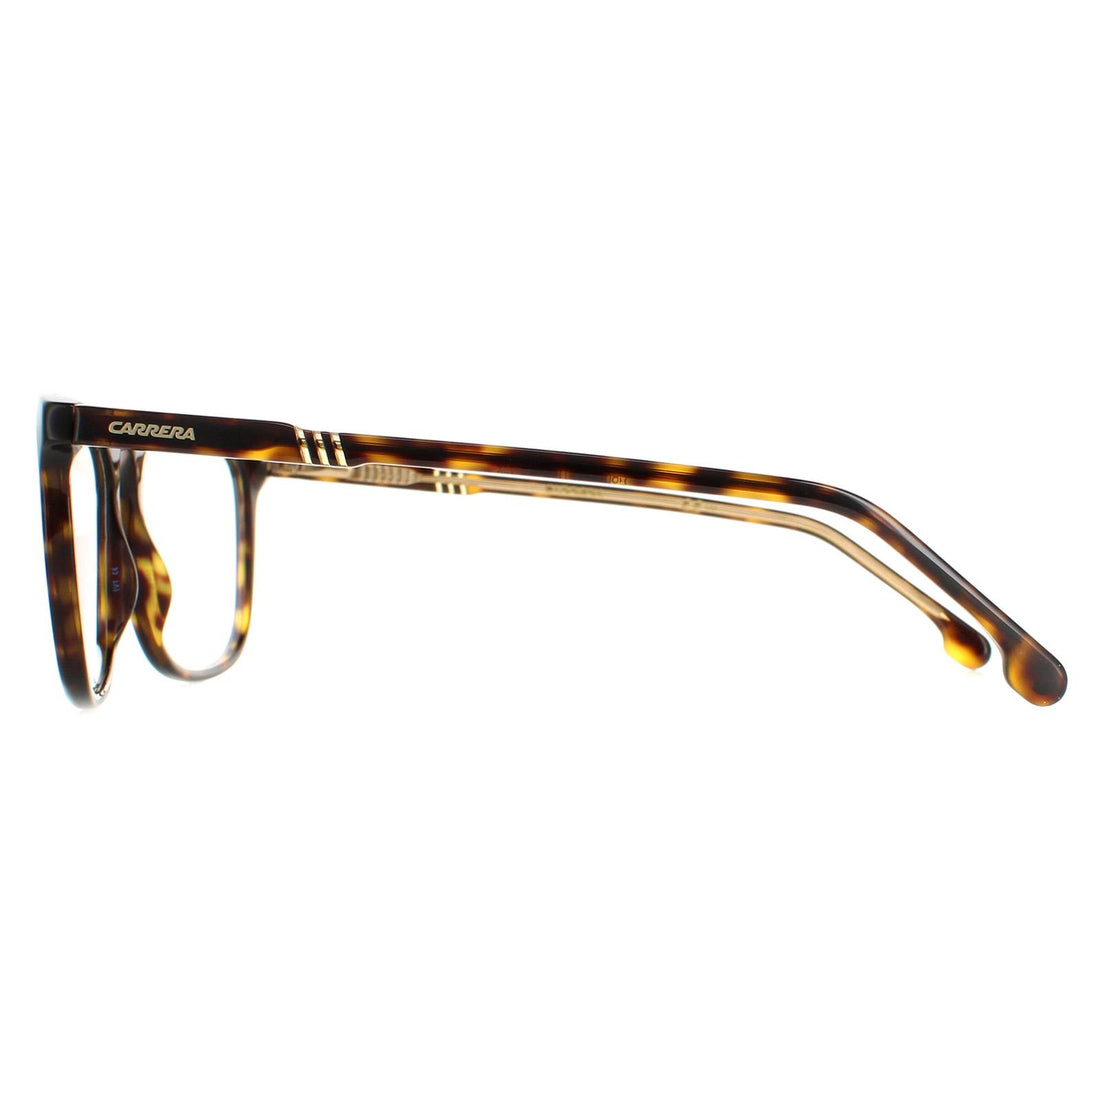 Carrera Glasses Frames 1125 086 Havana Men